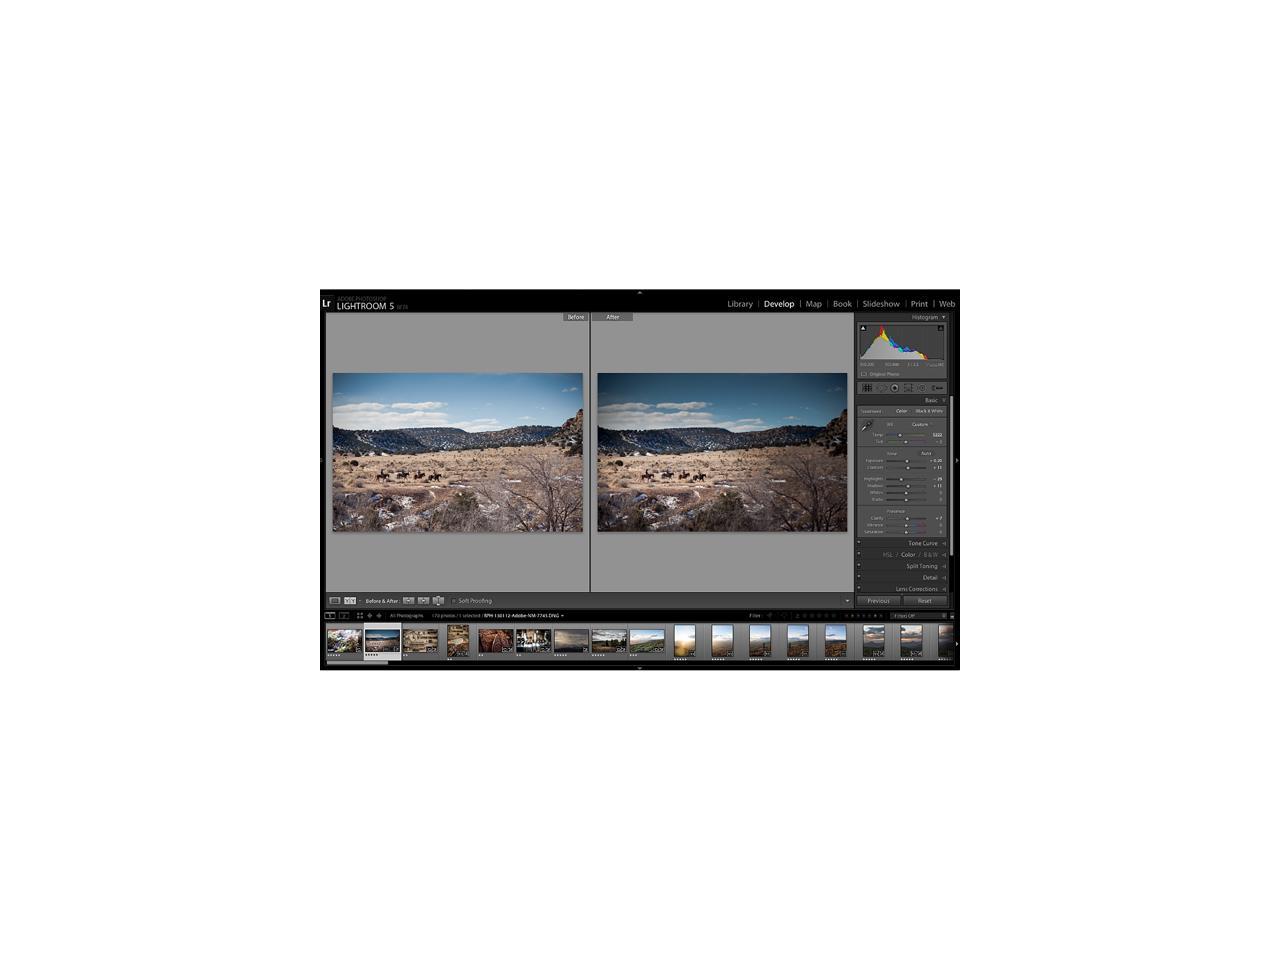 adobe photoshop lightroom 5 for mac free download